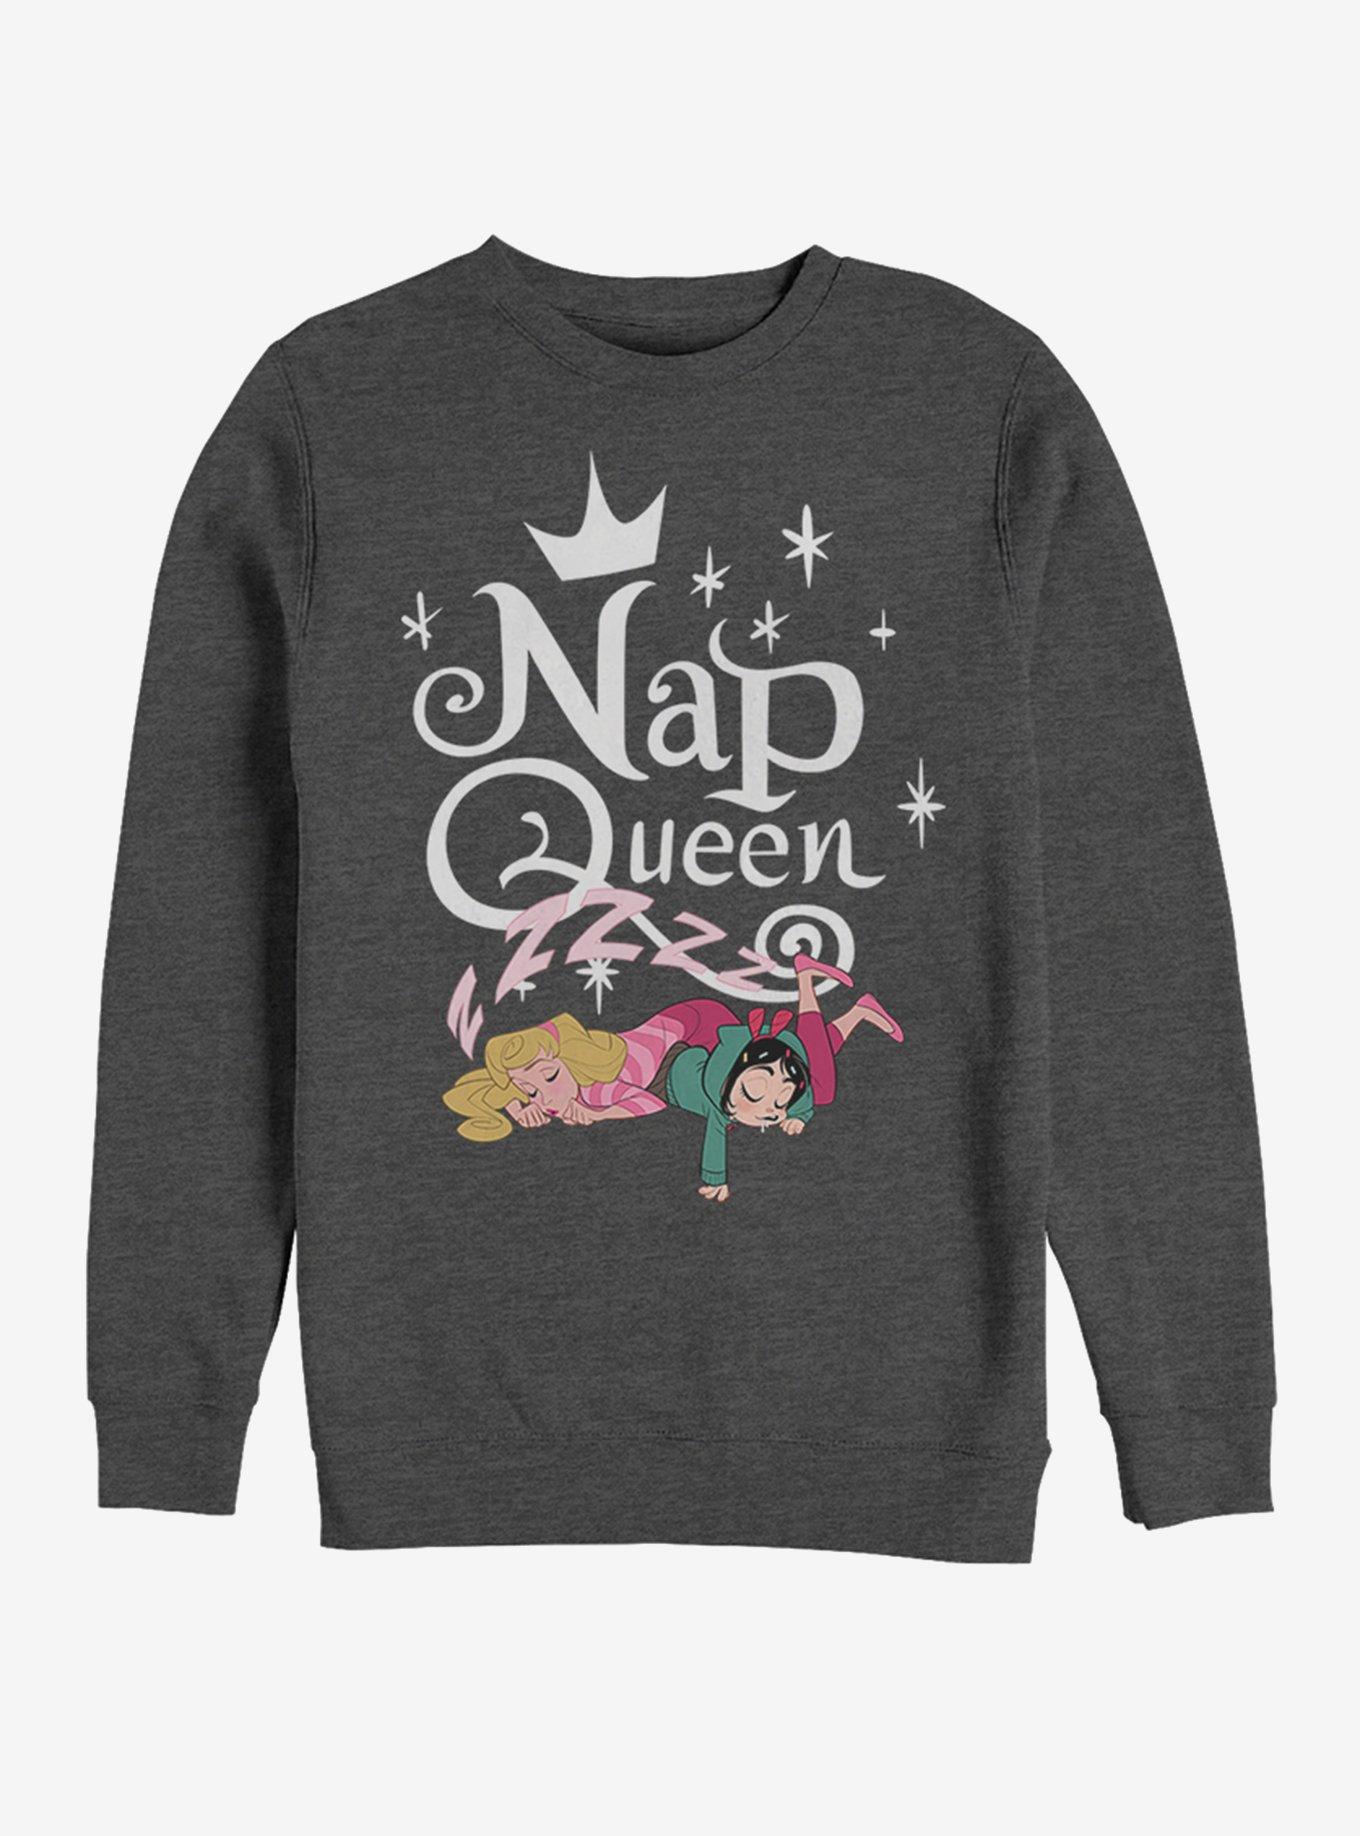 Aurora Disney Princess Ralph Breaks the Internet Comfy Squad Nap Queen  Clothing 